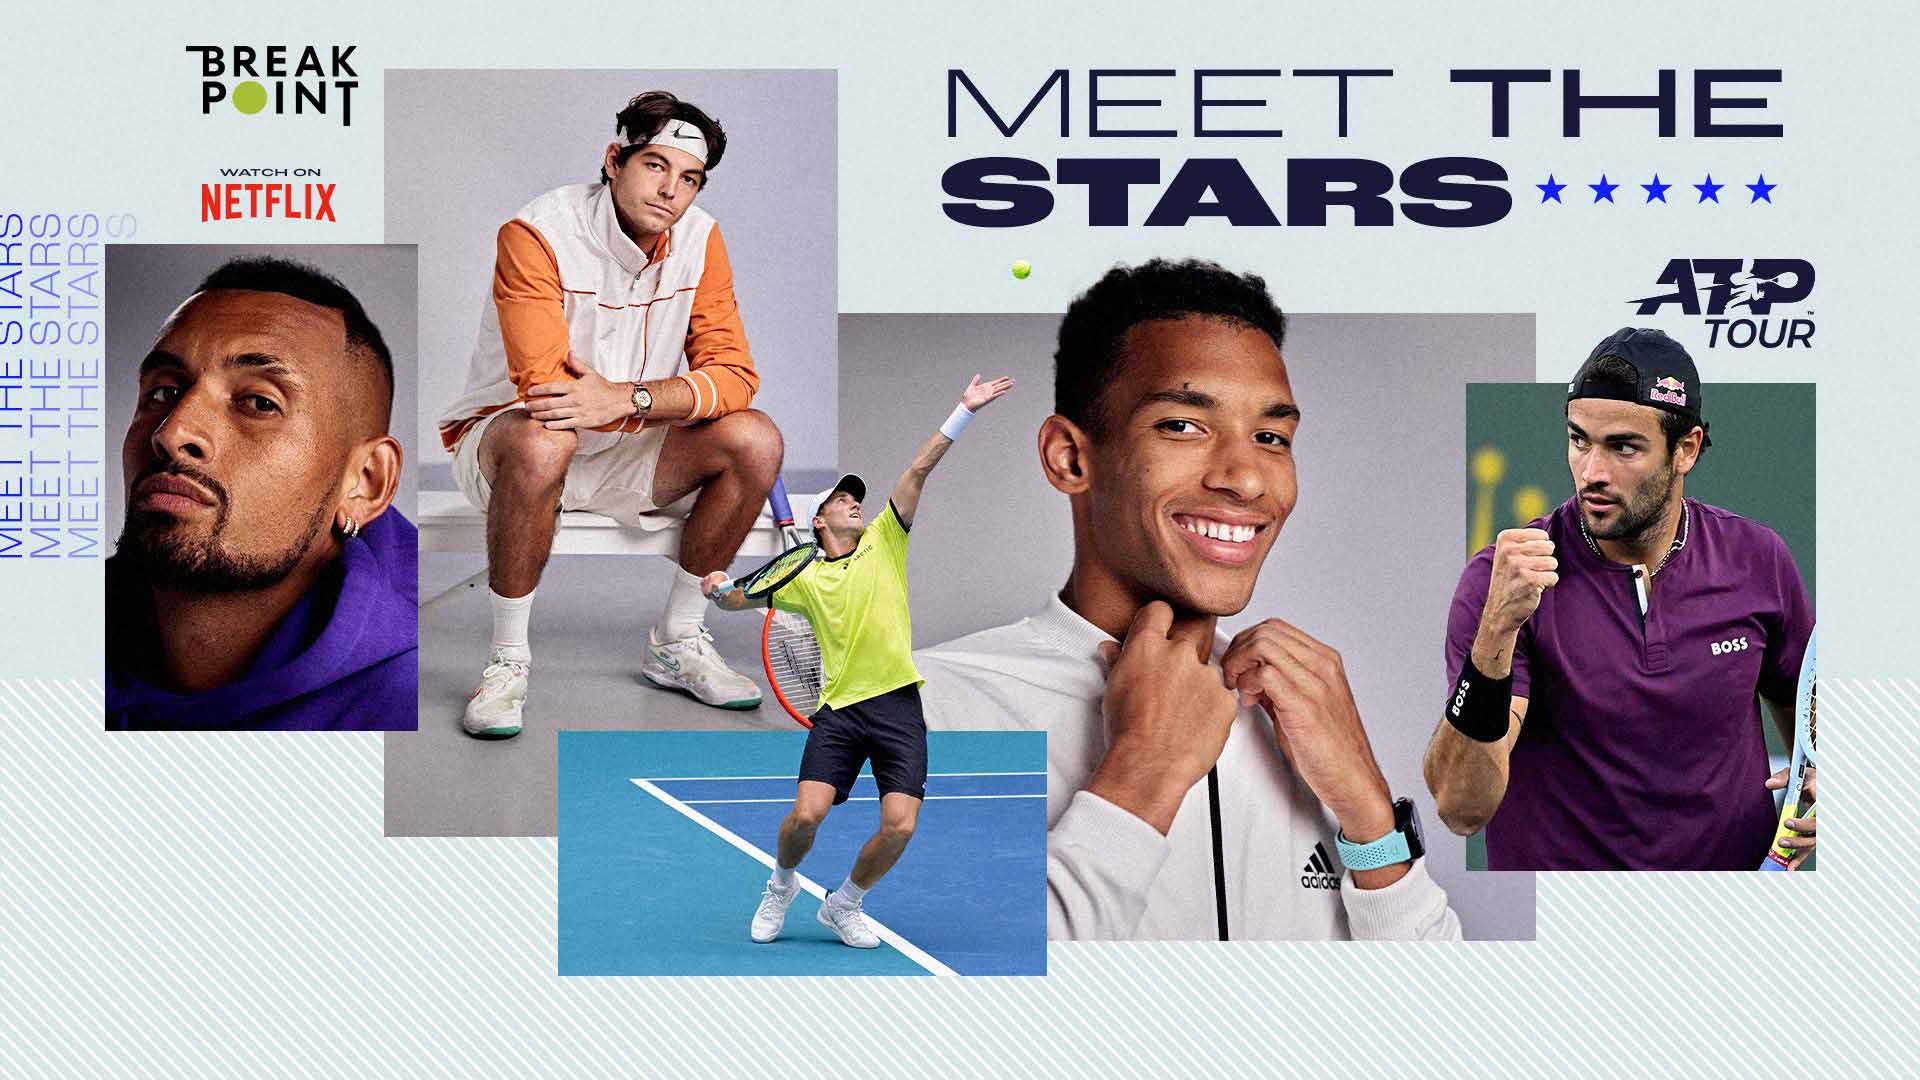 Break Point: Learn About Netflix's Tennis Series, ATP Tour